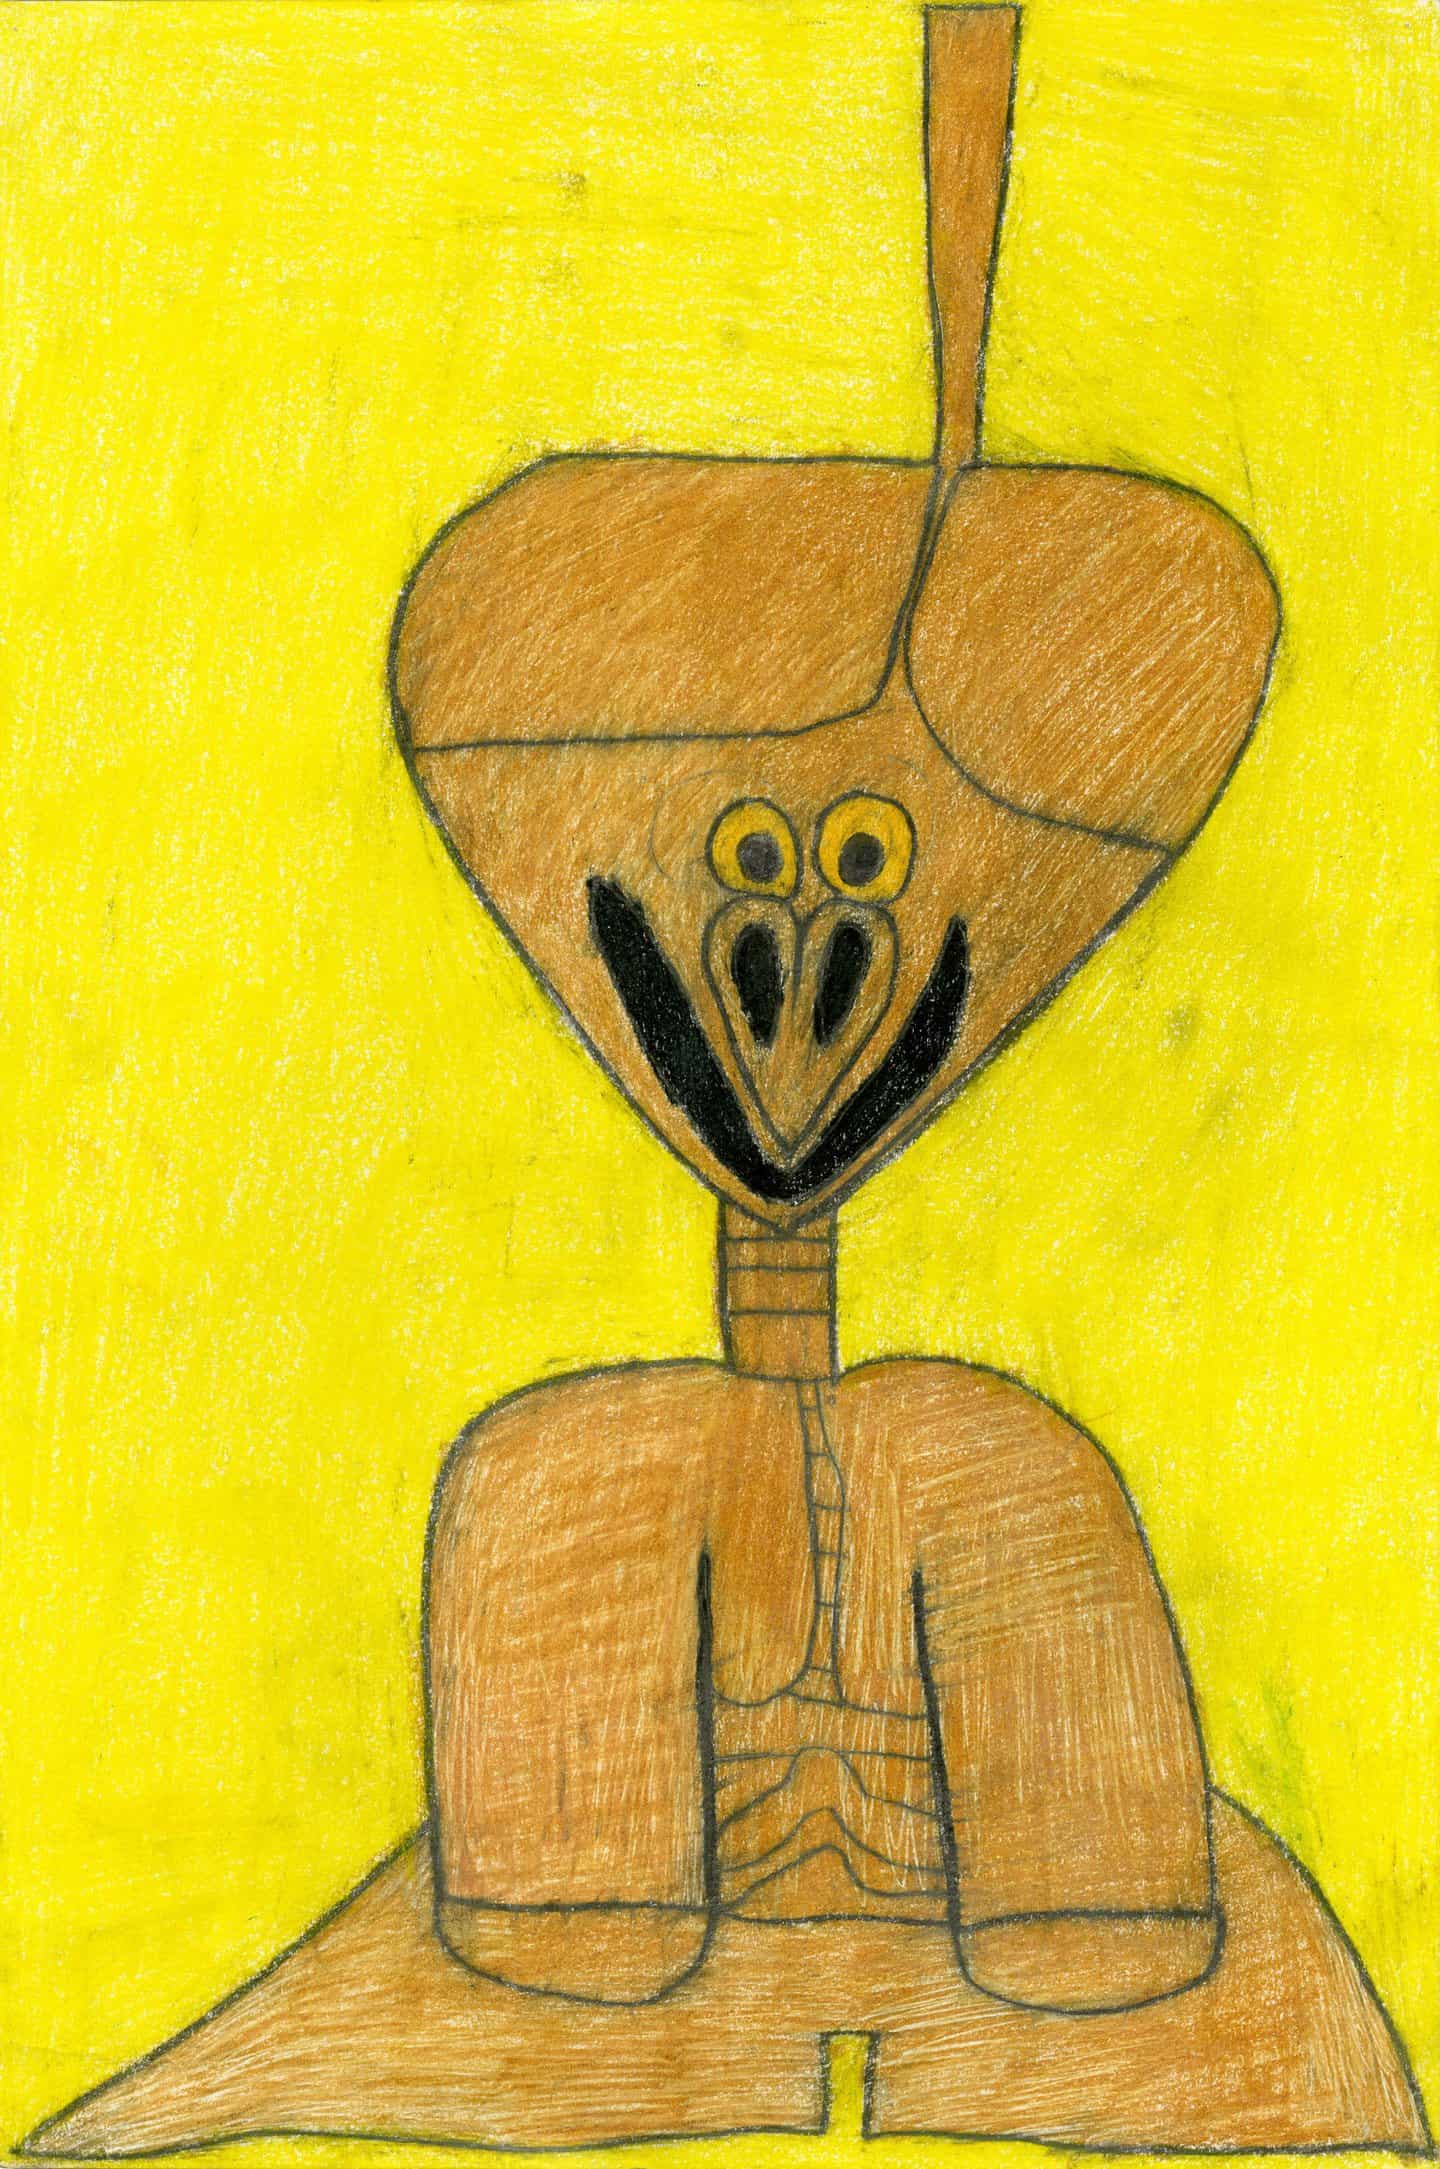 Anthony Coleman: E.T. Sobre el amarillo (Copyright © Anthony Coleman, 2020)